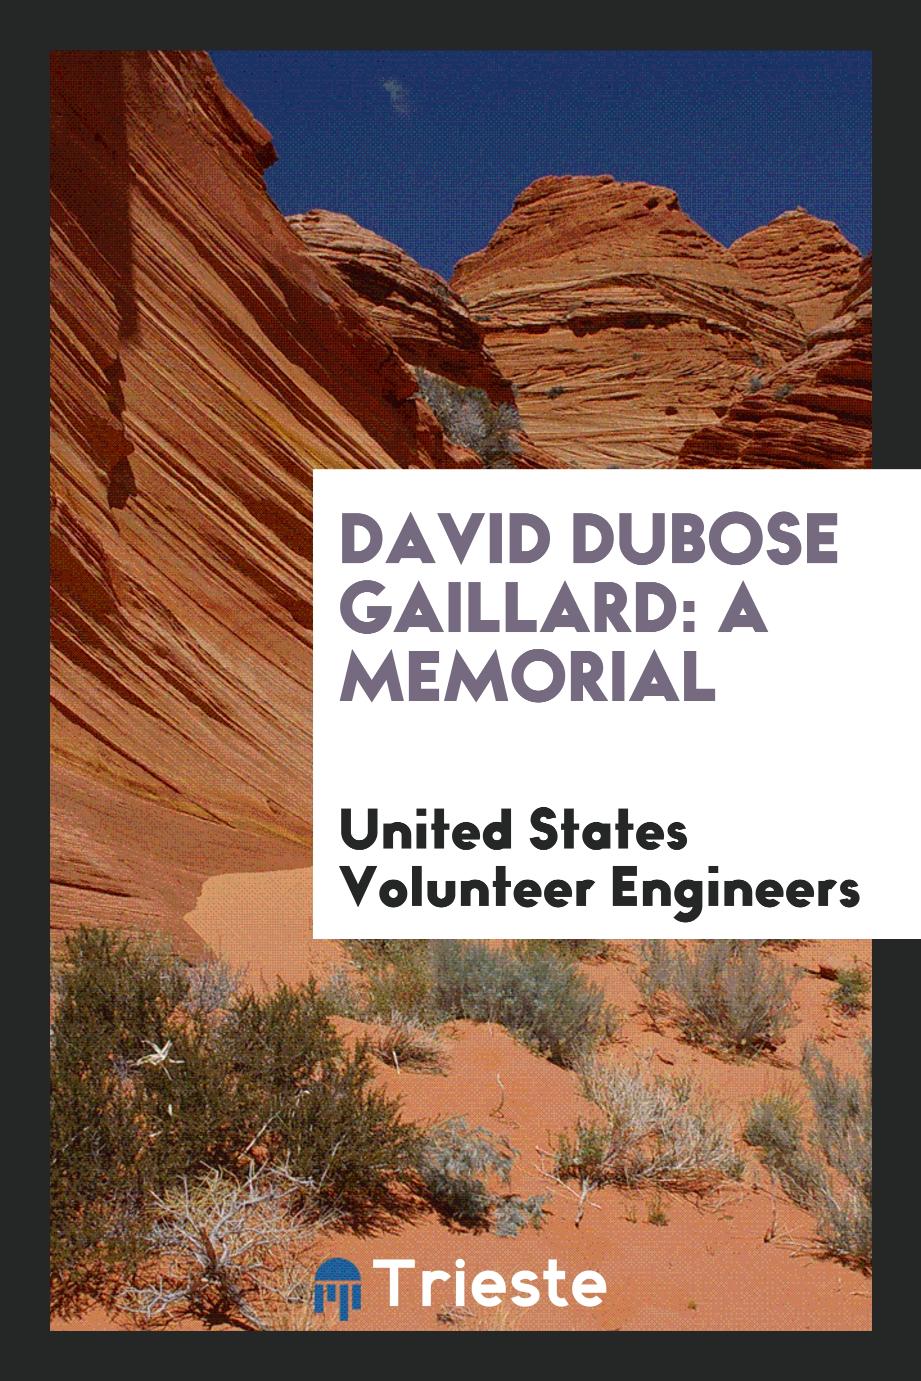 David DuBose Gaillard: A Memorial